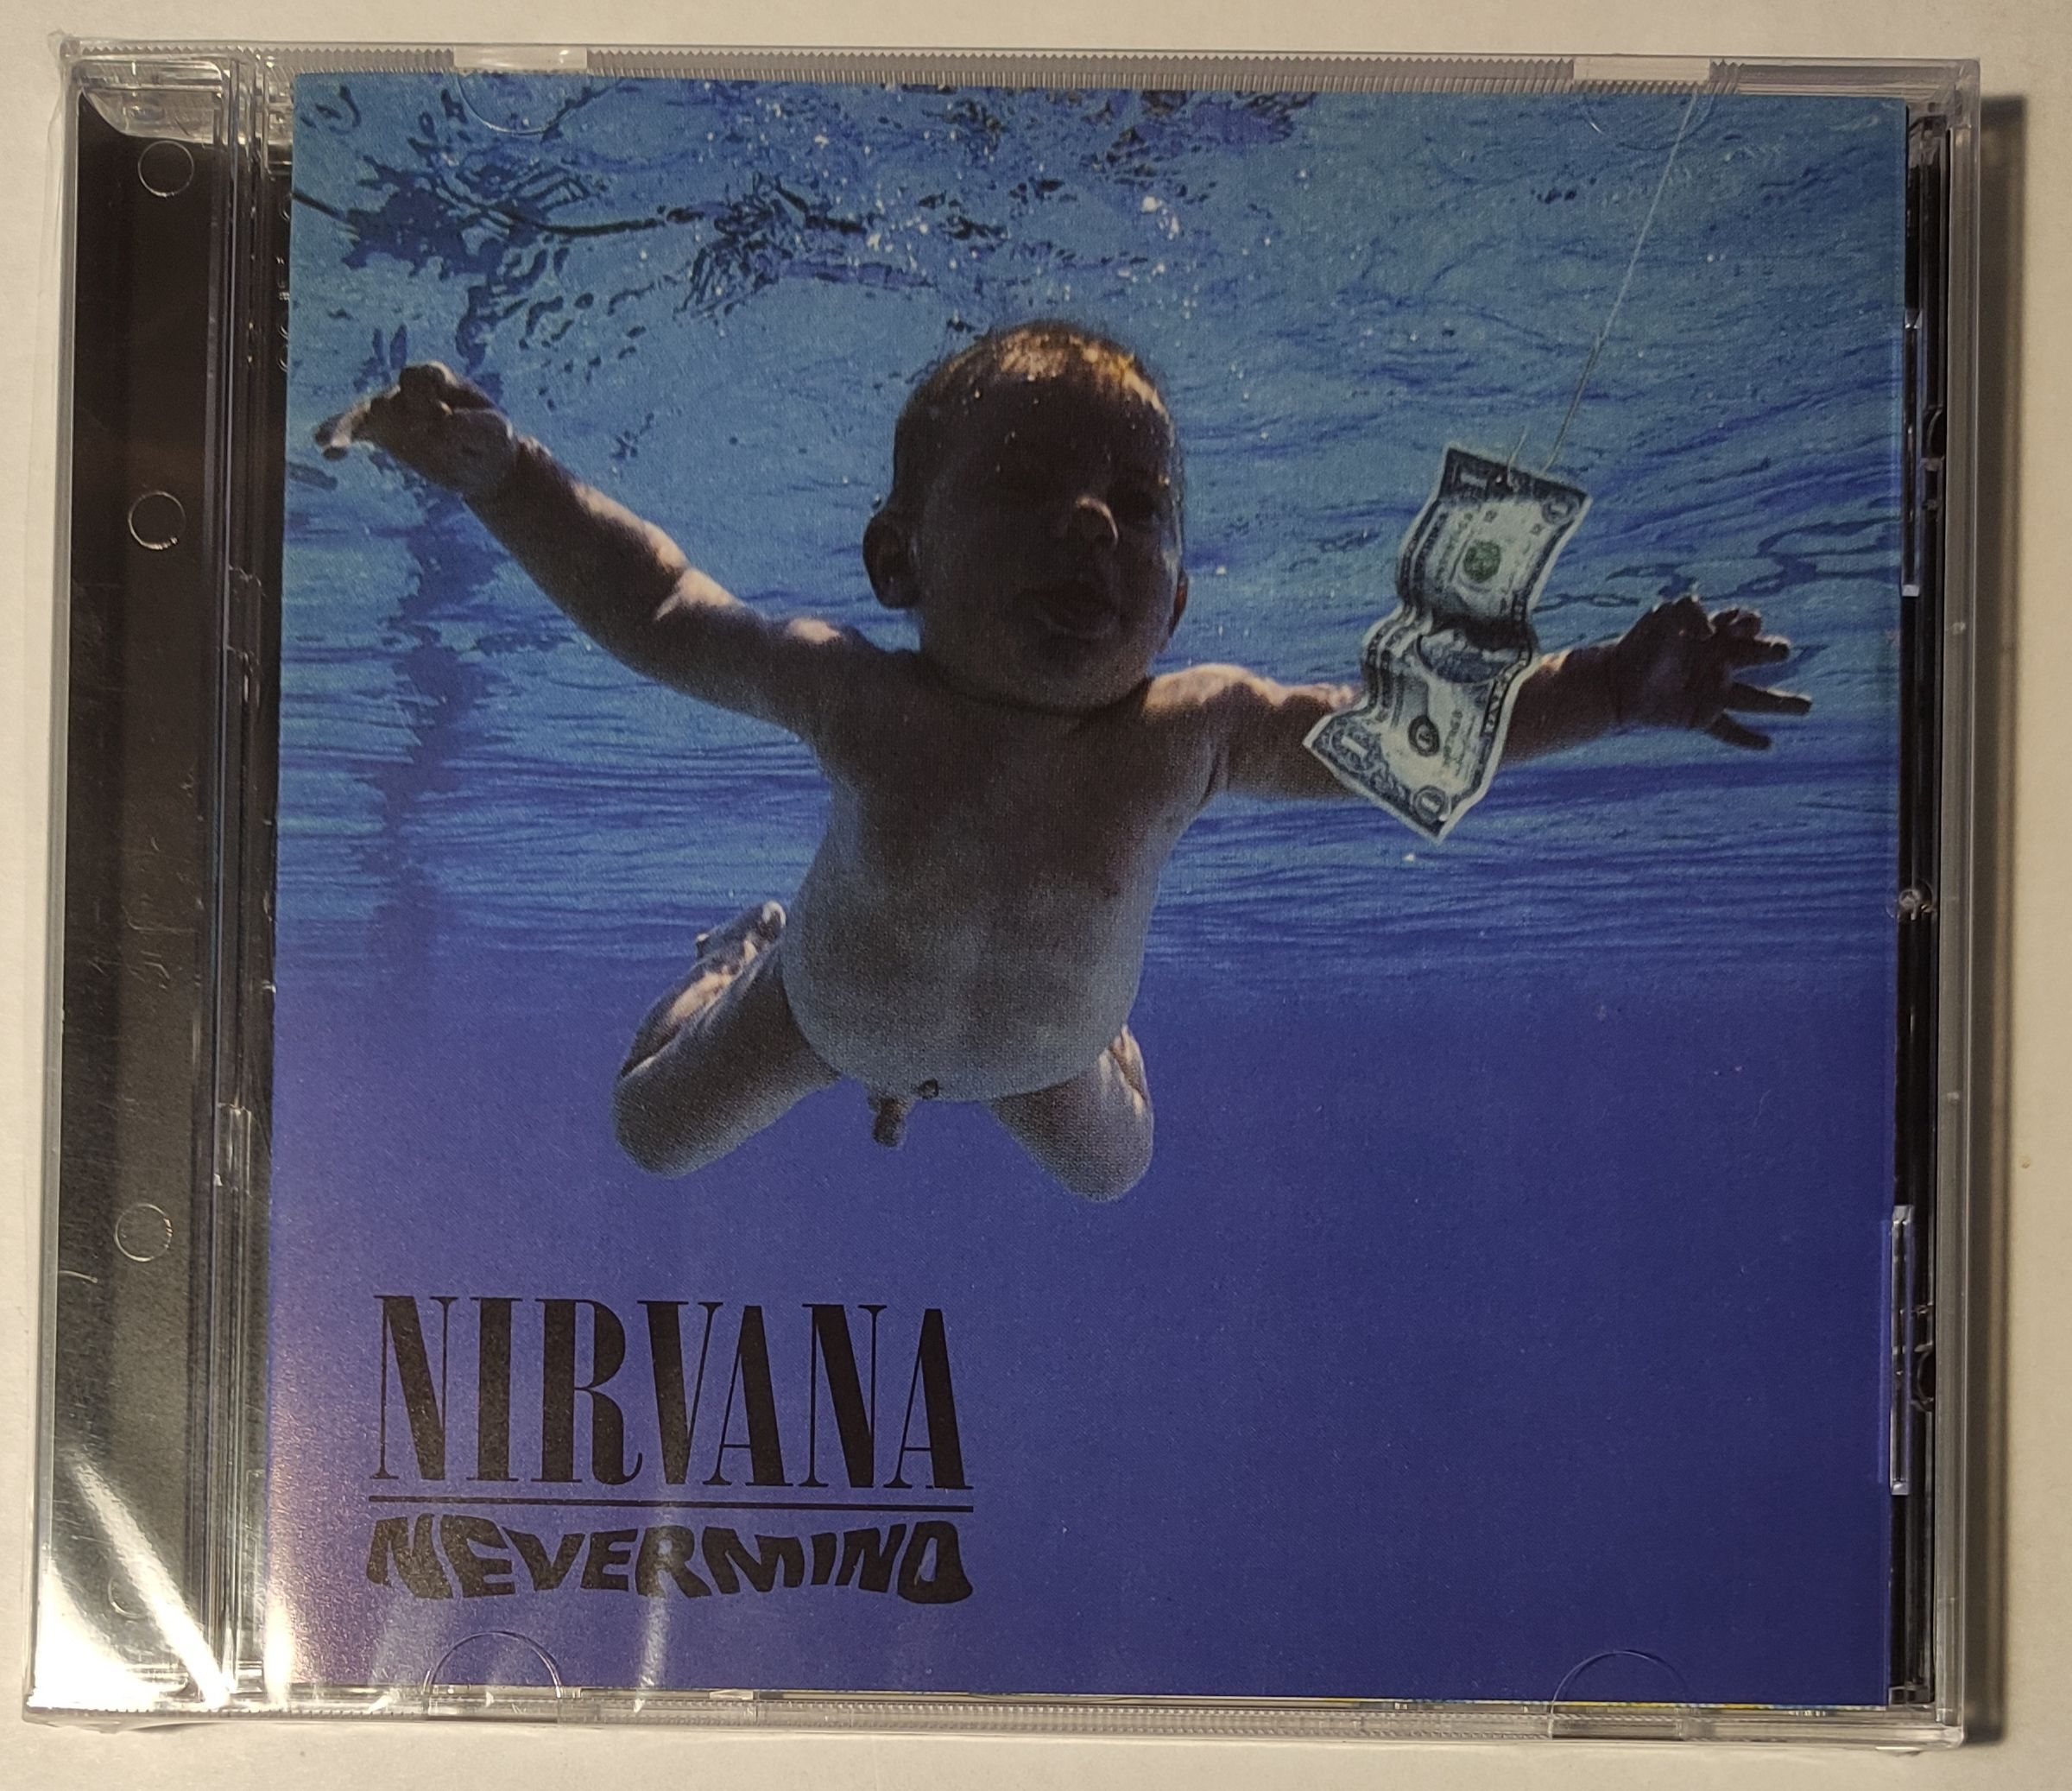 LP Nirvana: Nevermind. Нирвана обложка с ребенком. Nirvana Nevermind кассета. Nirvana stay